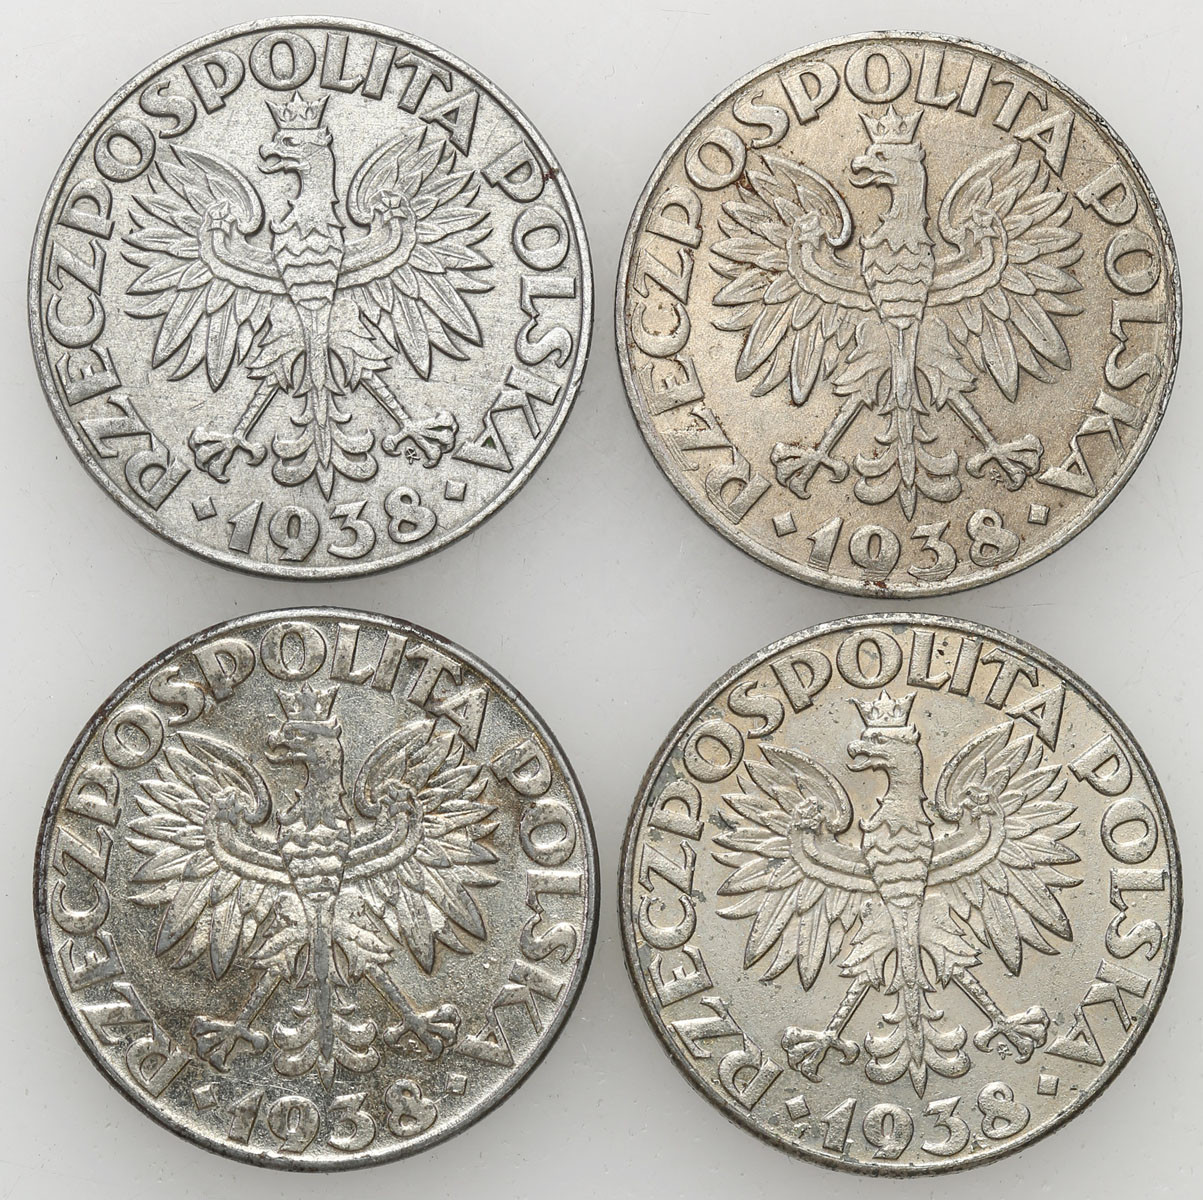 Generalna Gubernia. 50 groszy 1938, zestaw 4 monet